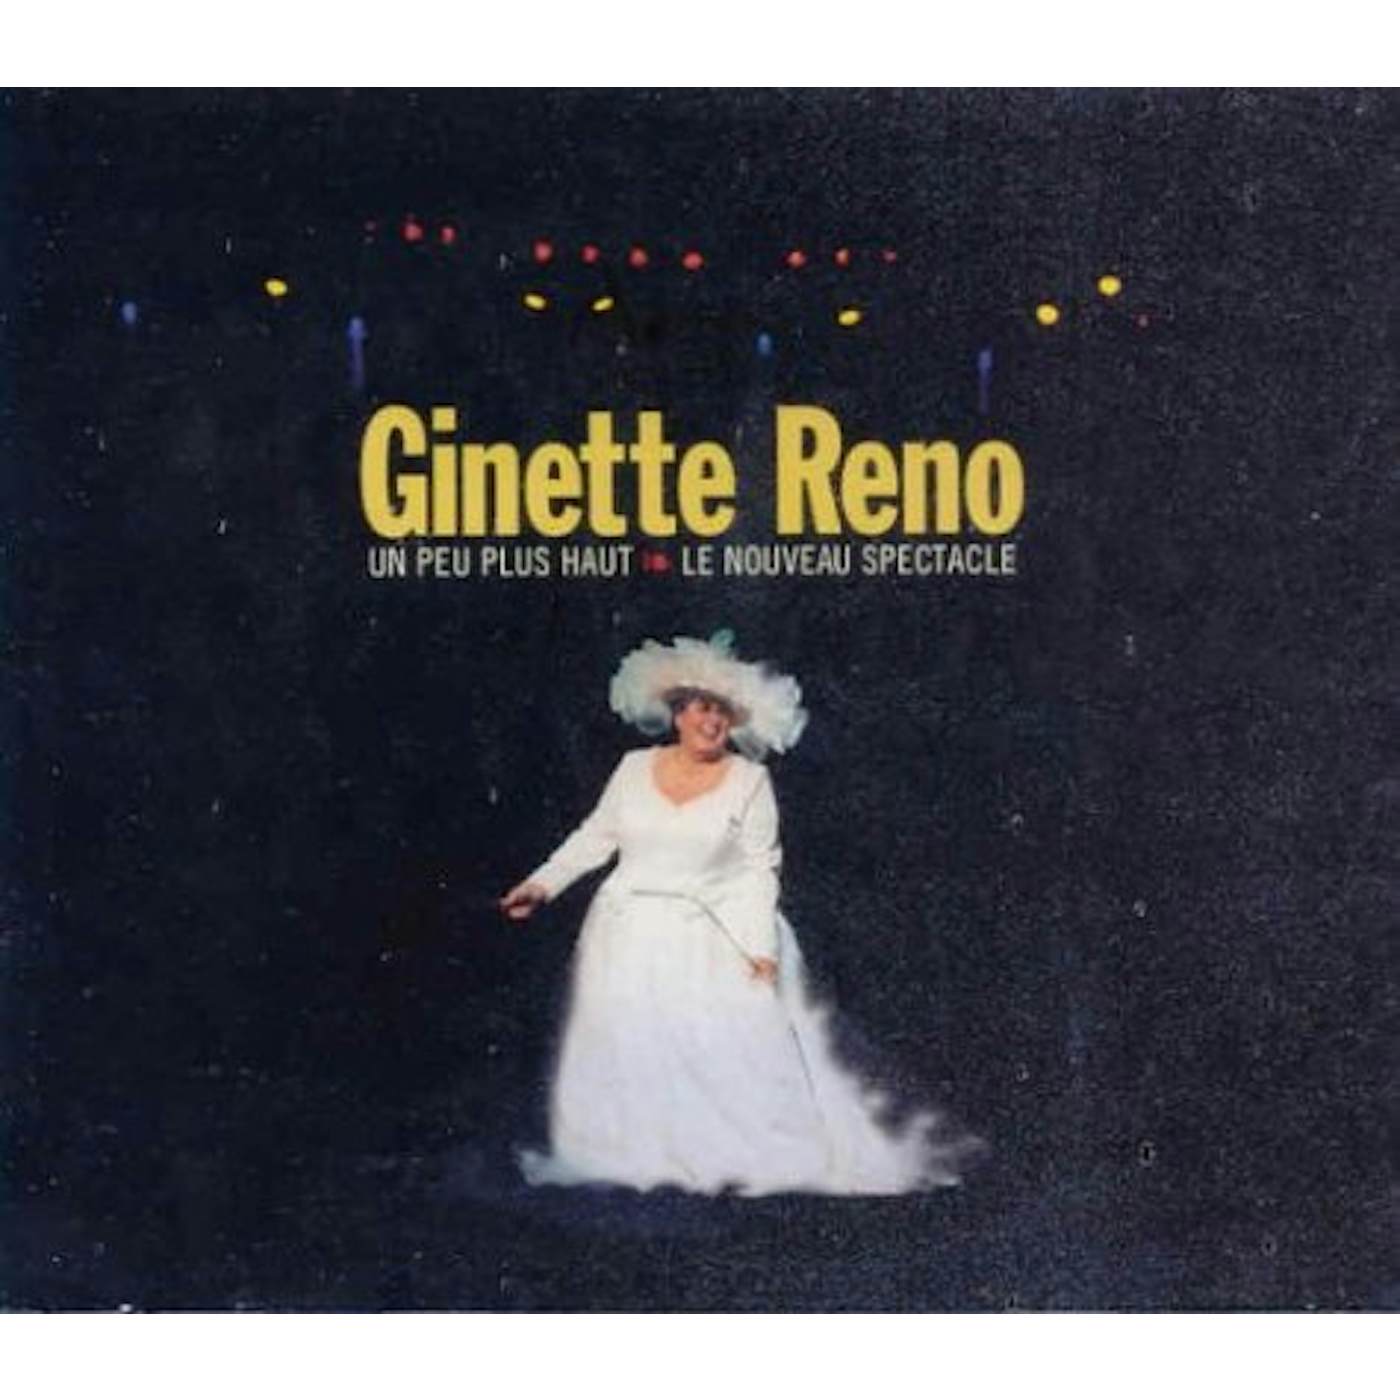 Ginette Reno 1999: UN PEU PLUS HAUT CD